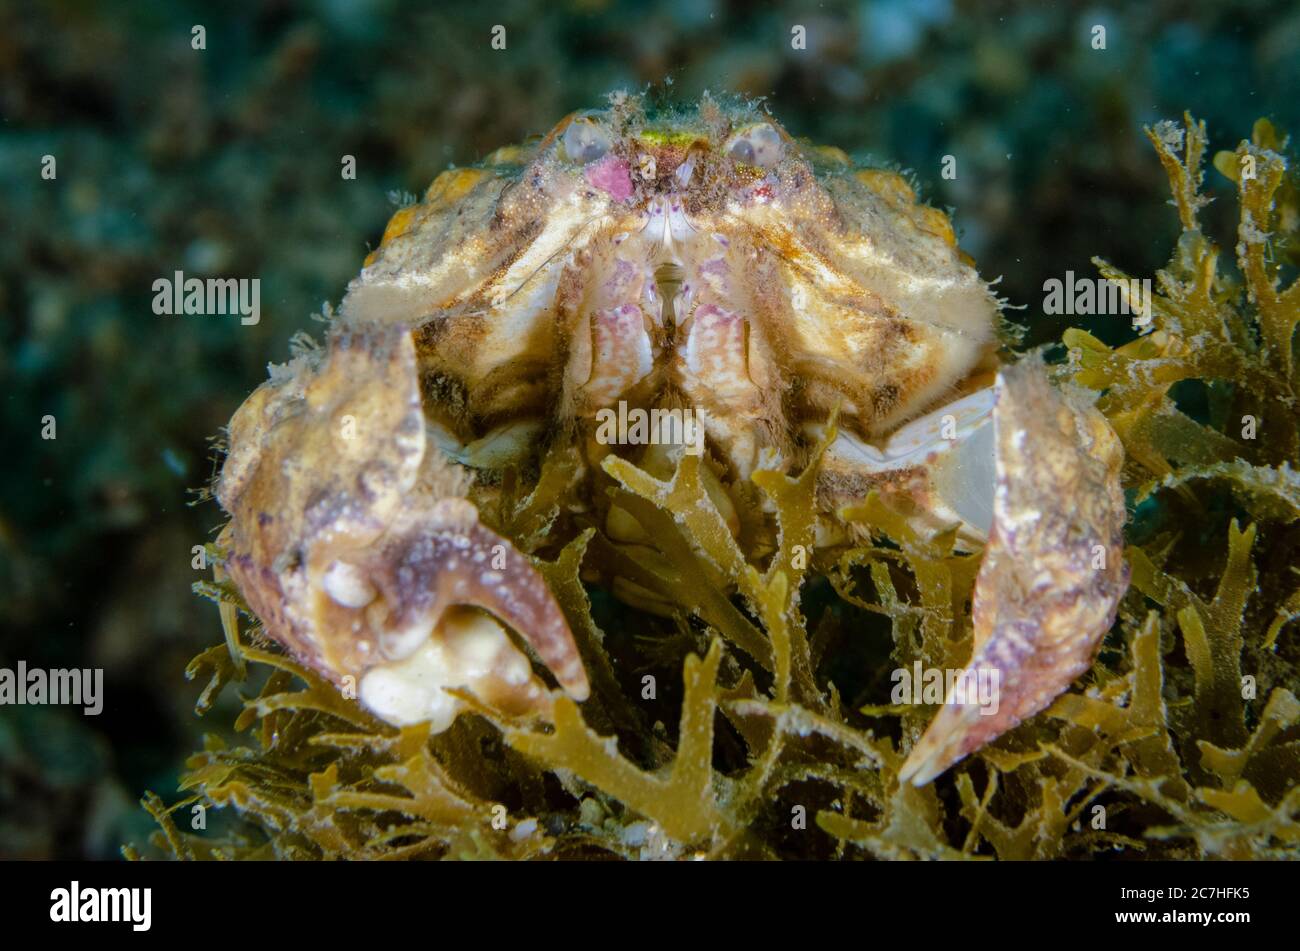 Box Crab, Calappa sp, on coral, Tasi Tolu dive site, Dili, East Timor Stock Photo